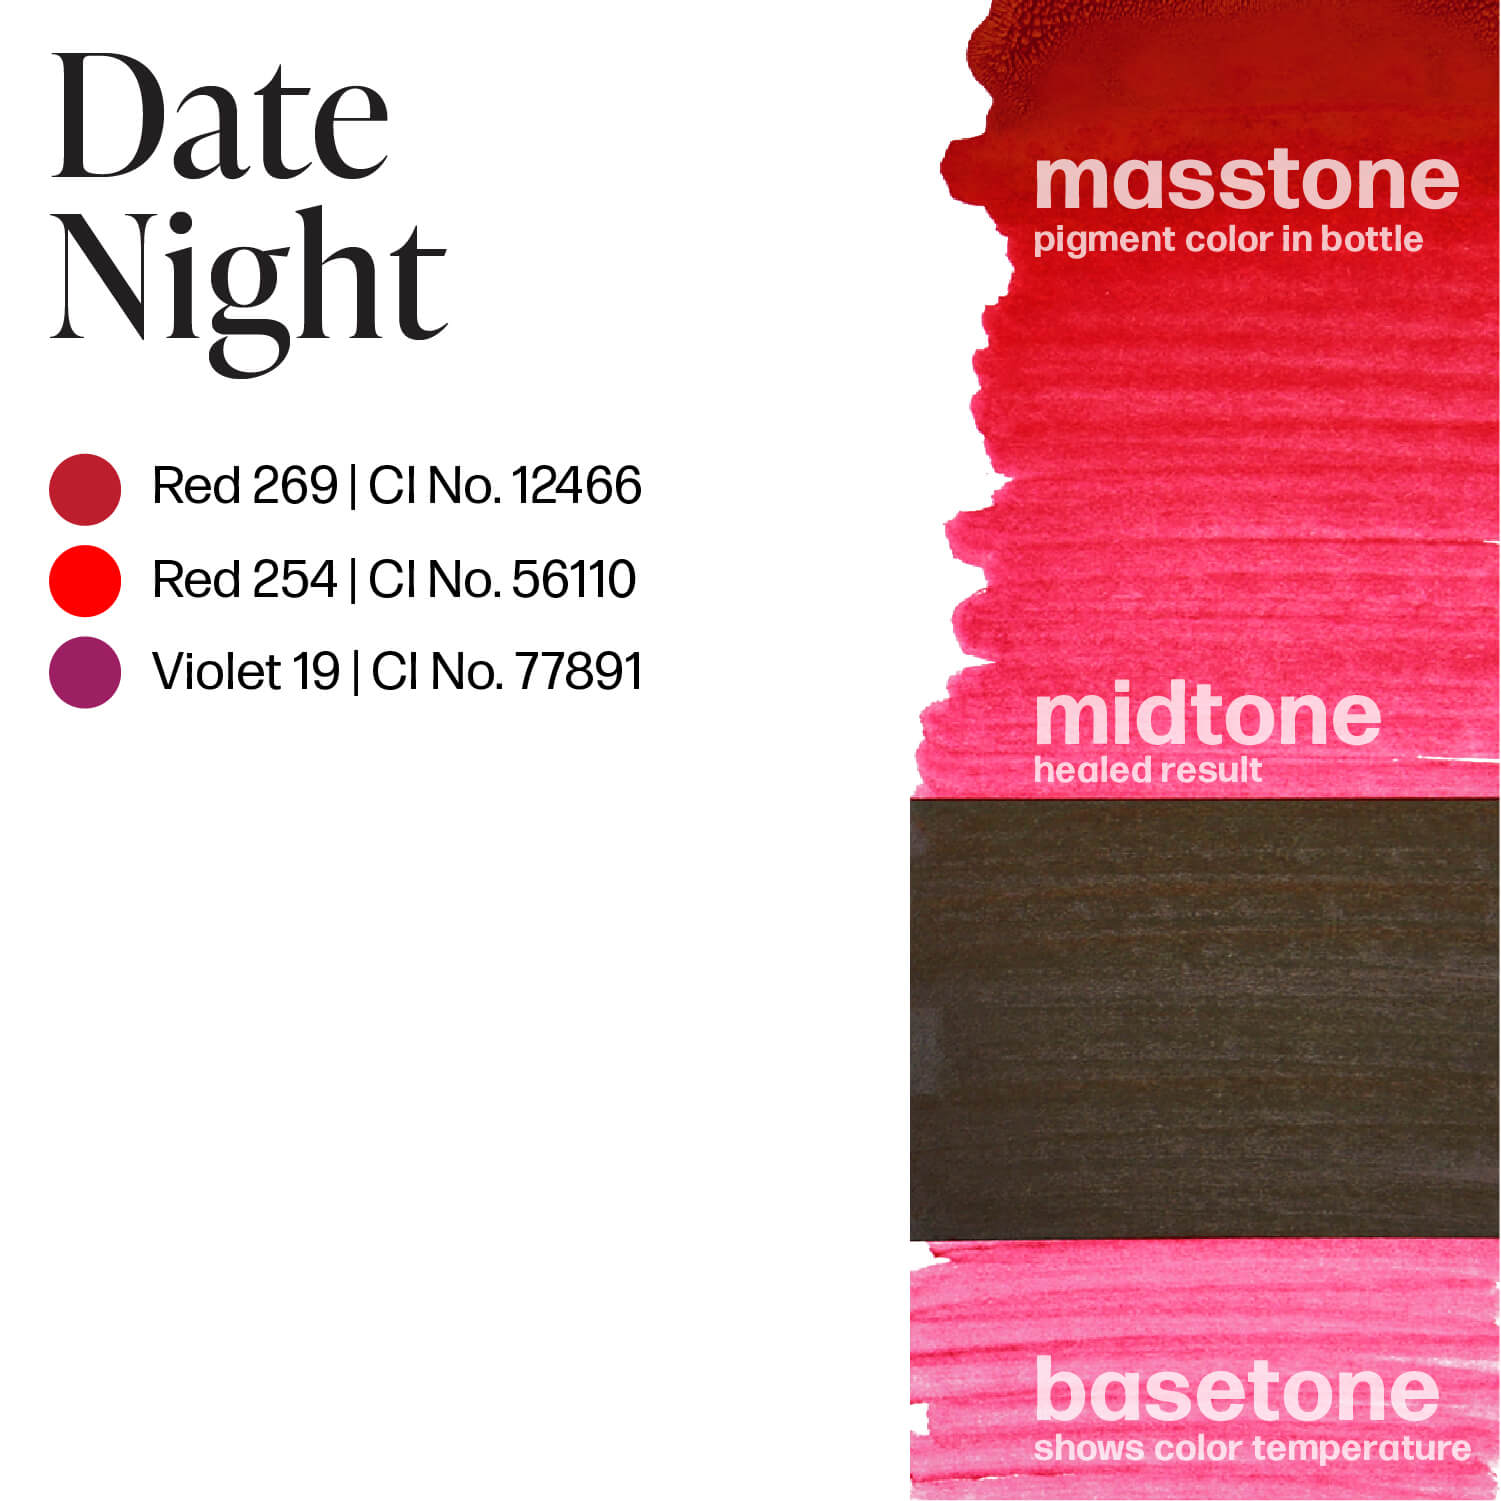 Perma Blend Date Night Lip Blush Masstone Midtone Basetone Drawdown